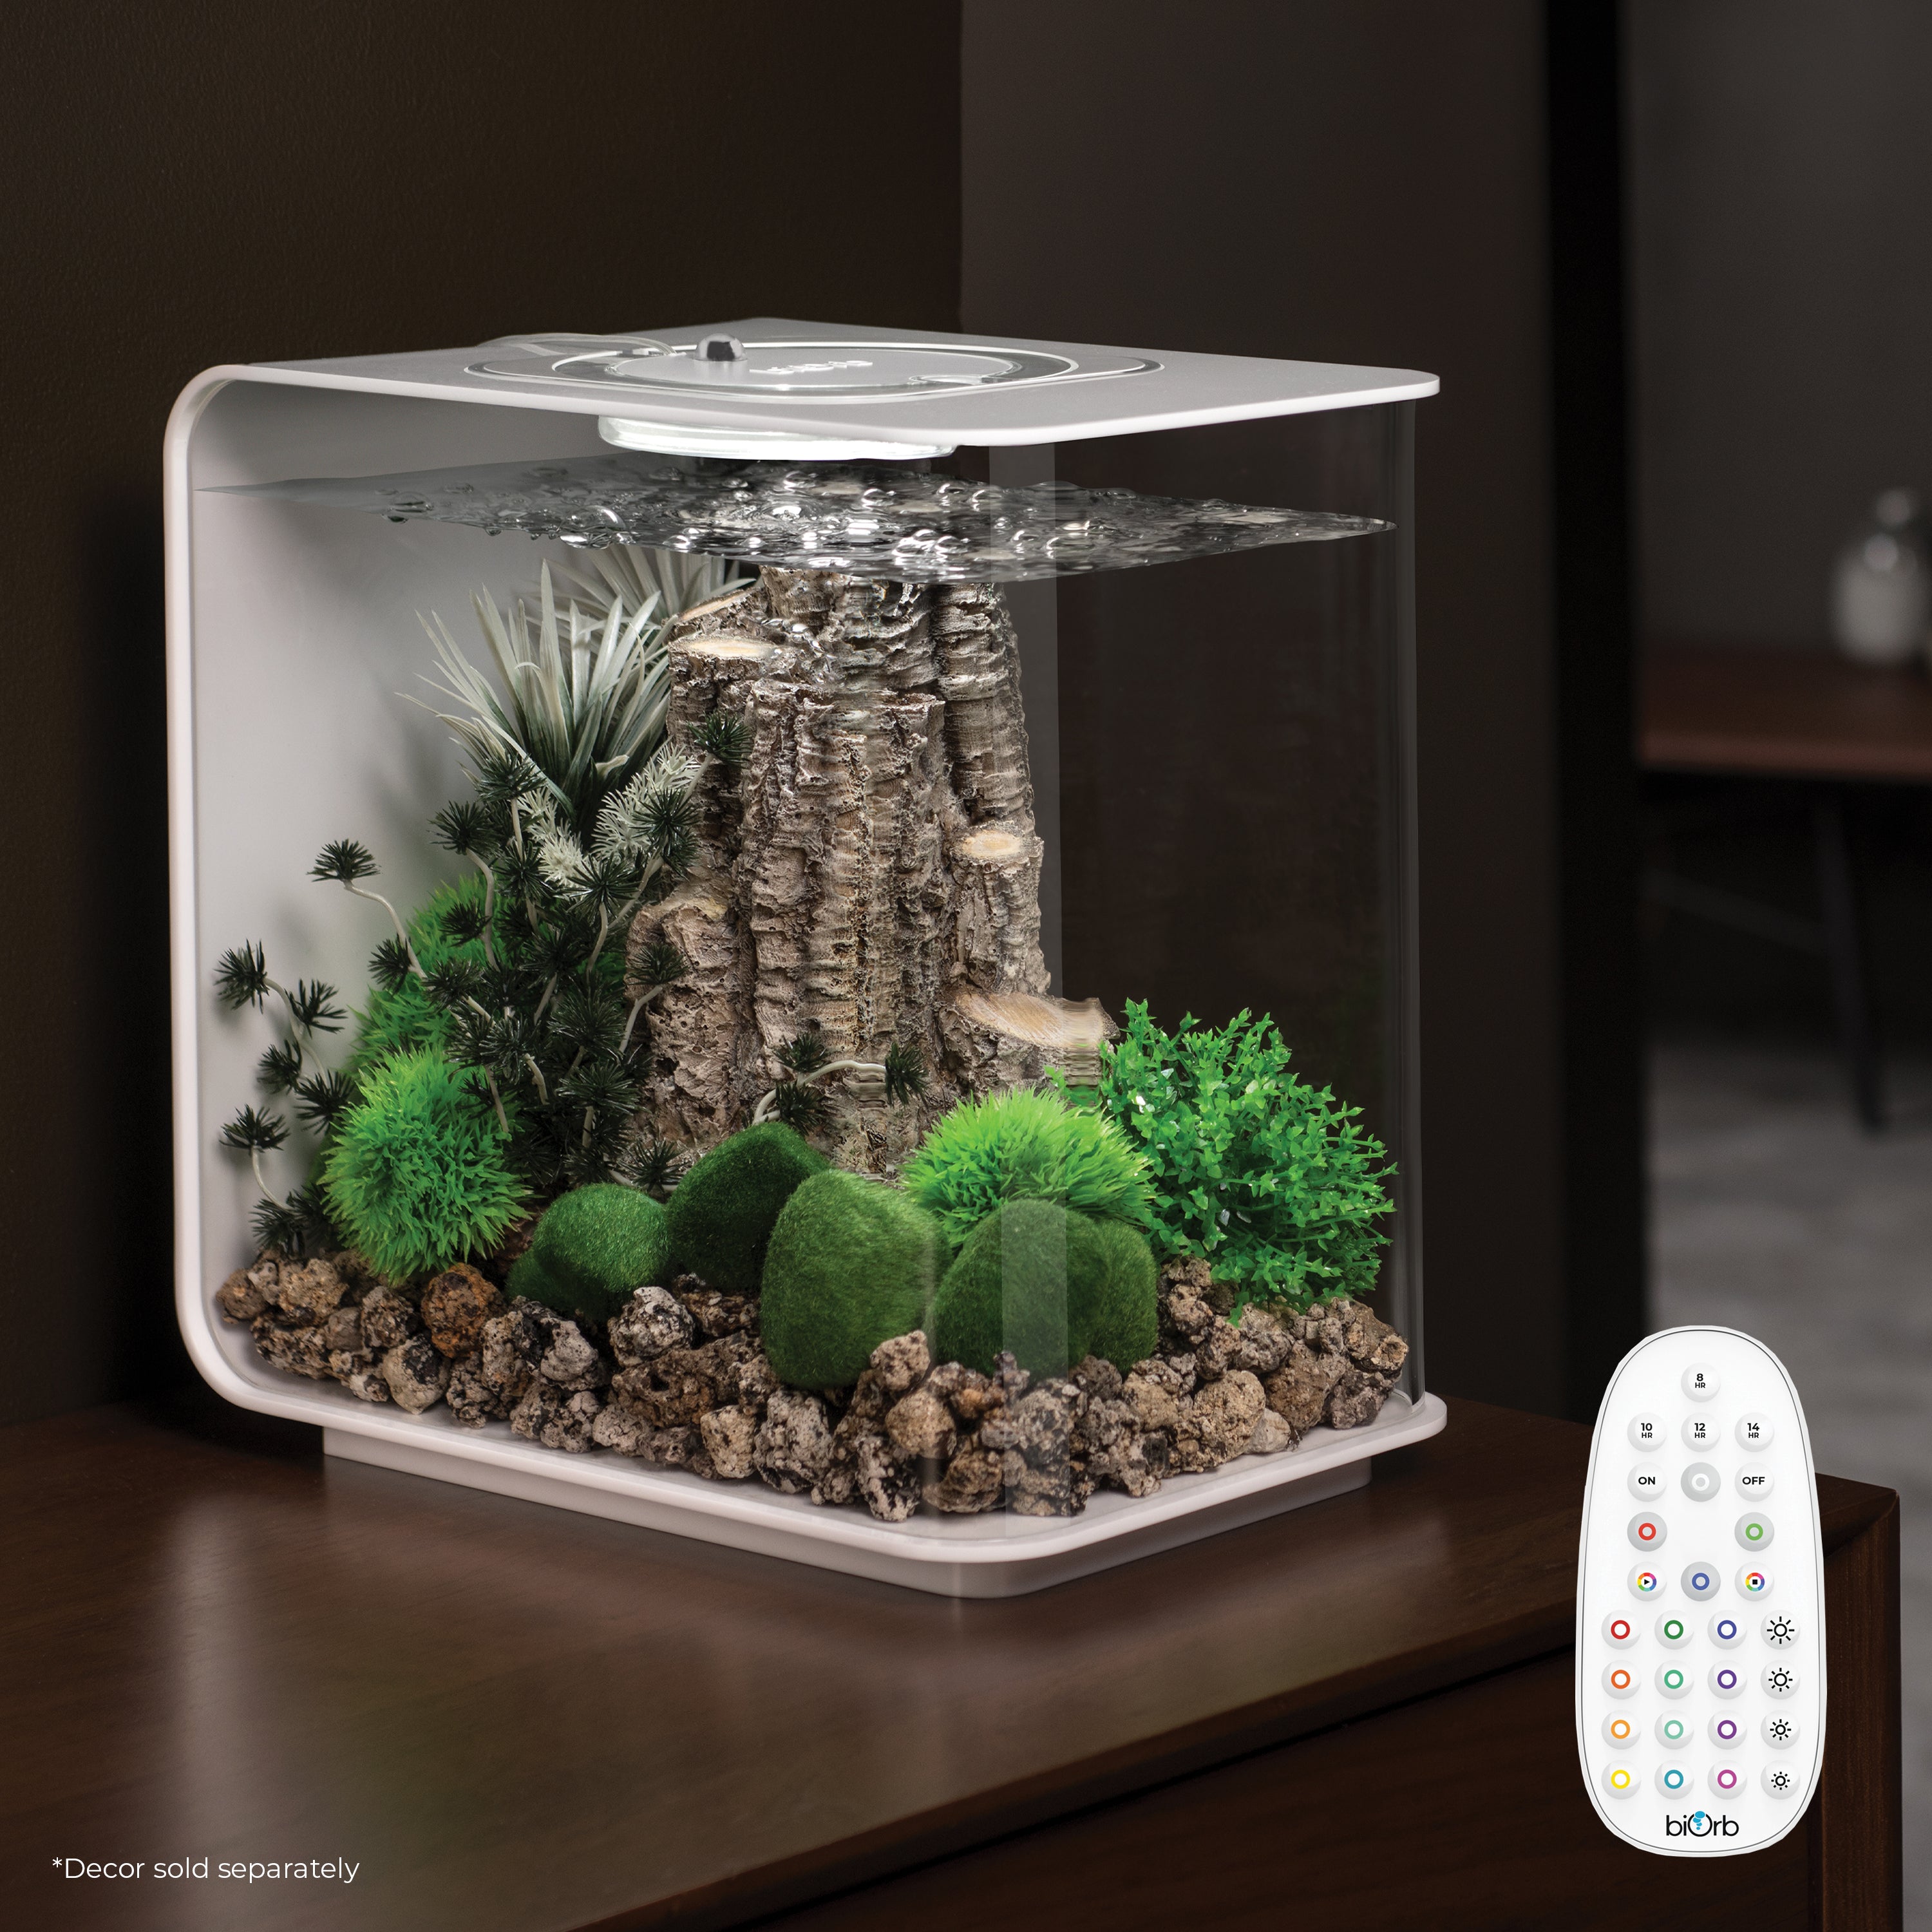 Get inspiration for your aquarium FLOW 15 Aquarium with MCR Light - 4 gallon available in white